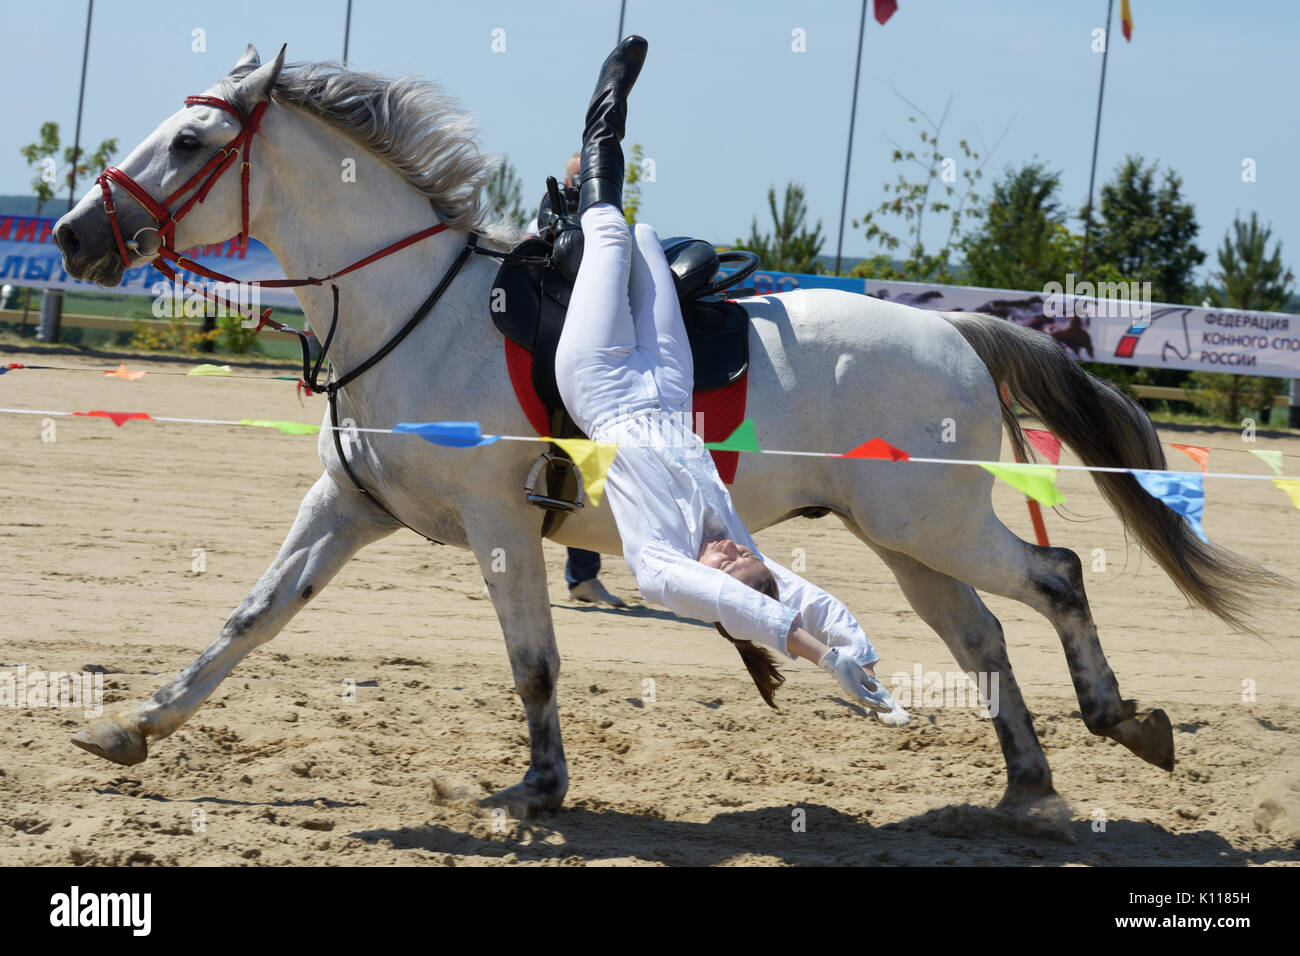 Lytkarino, Moscow region, Russia - July 12, 2014: Anna Rimashevskaya performs stunt during Russian championship in trick riding. Lytkarino housed the  Stock Photo